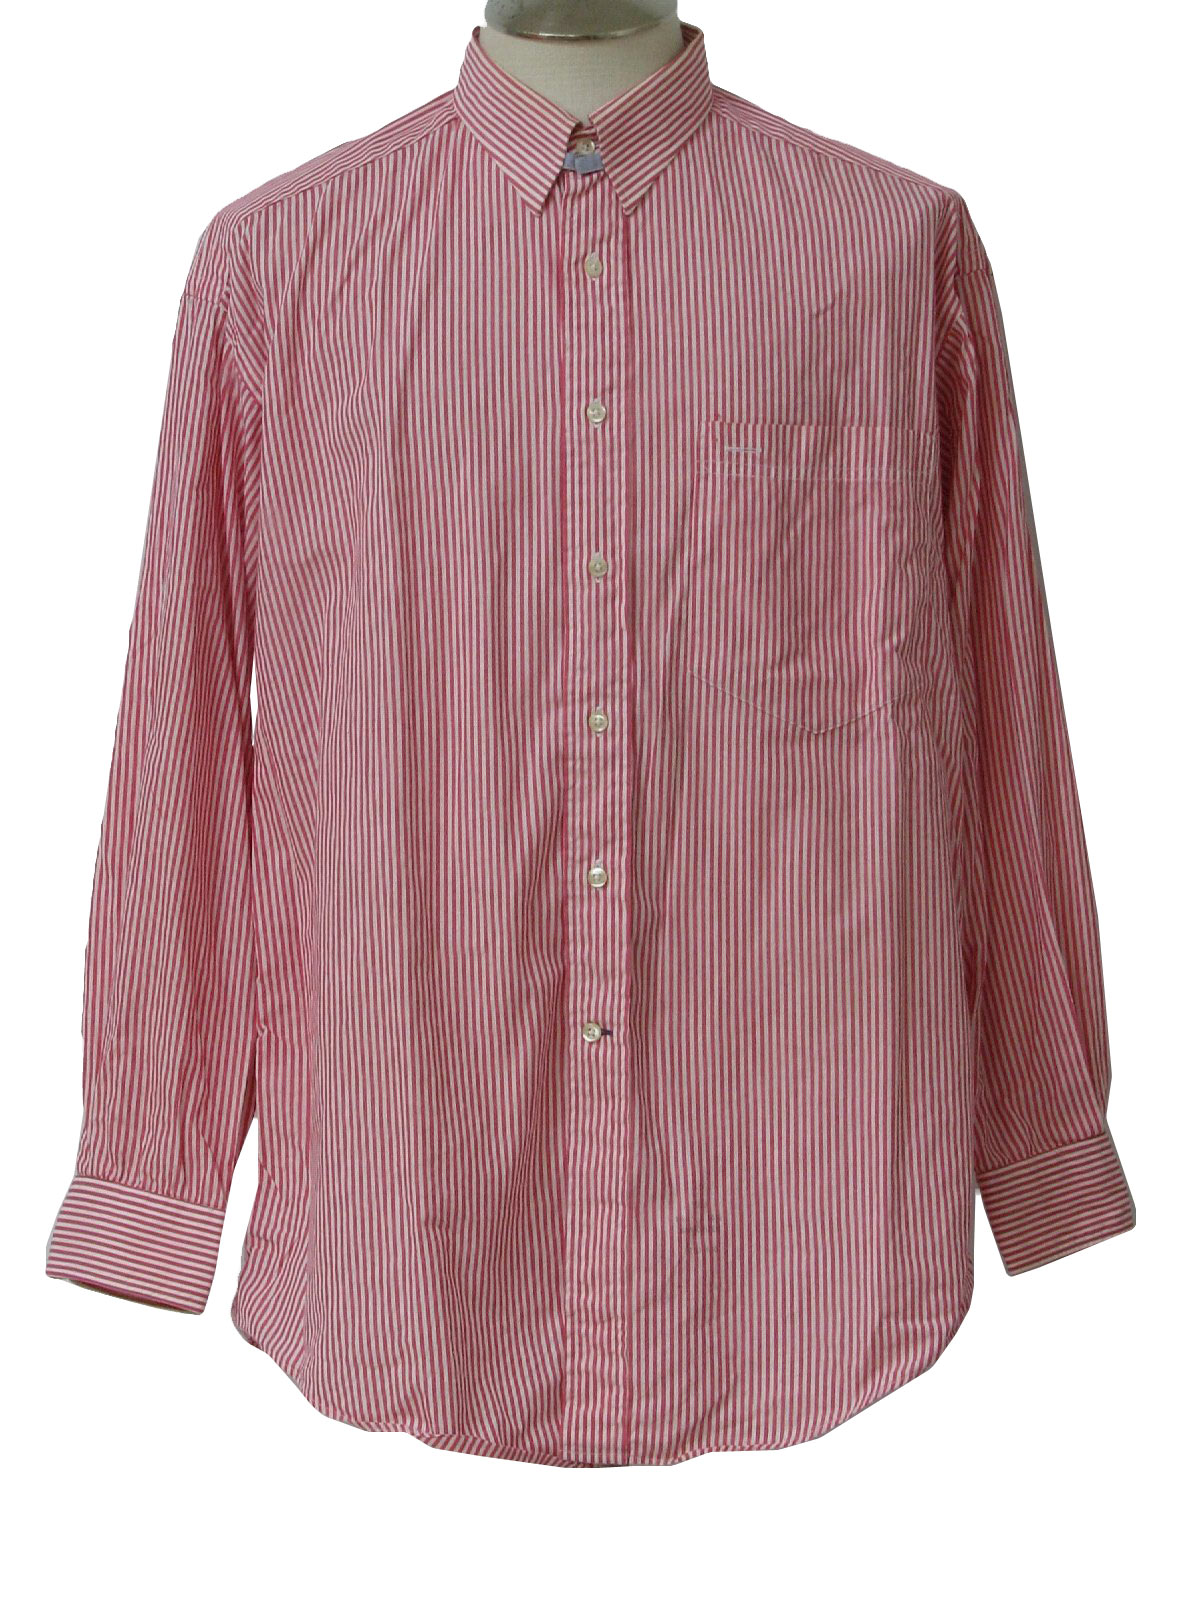 1980's Retro Shirt: 80s -Sero- Mens cotton, tail hemmed, longsleeve ...